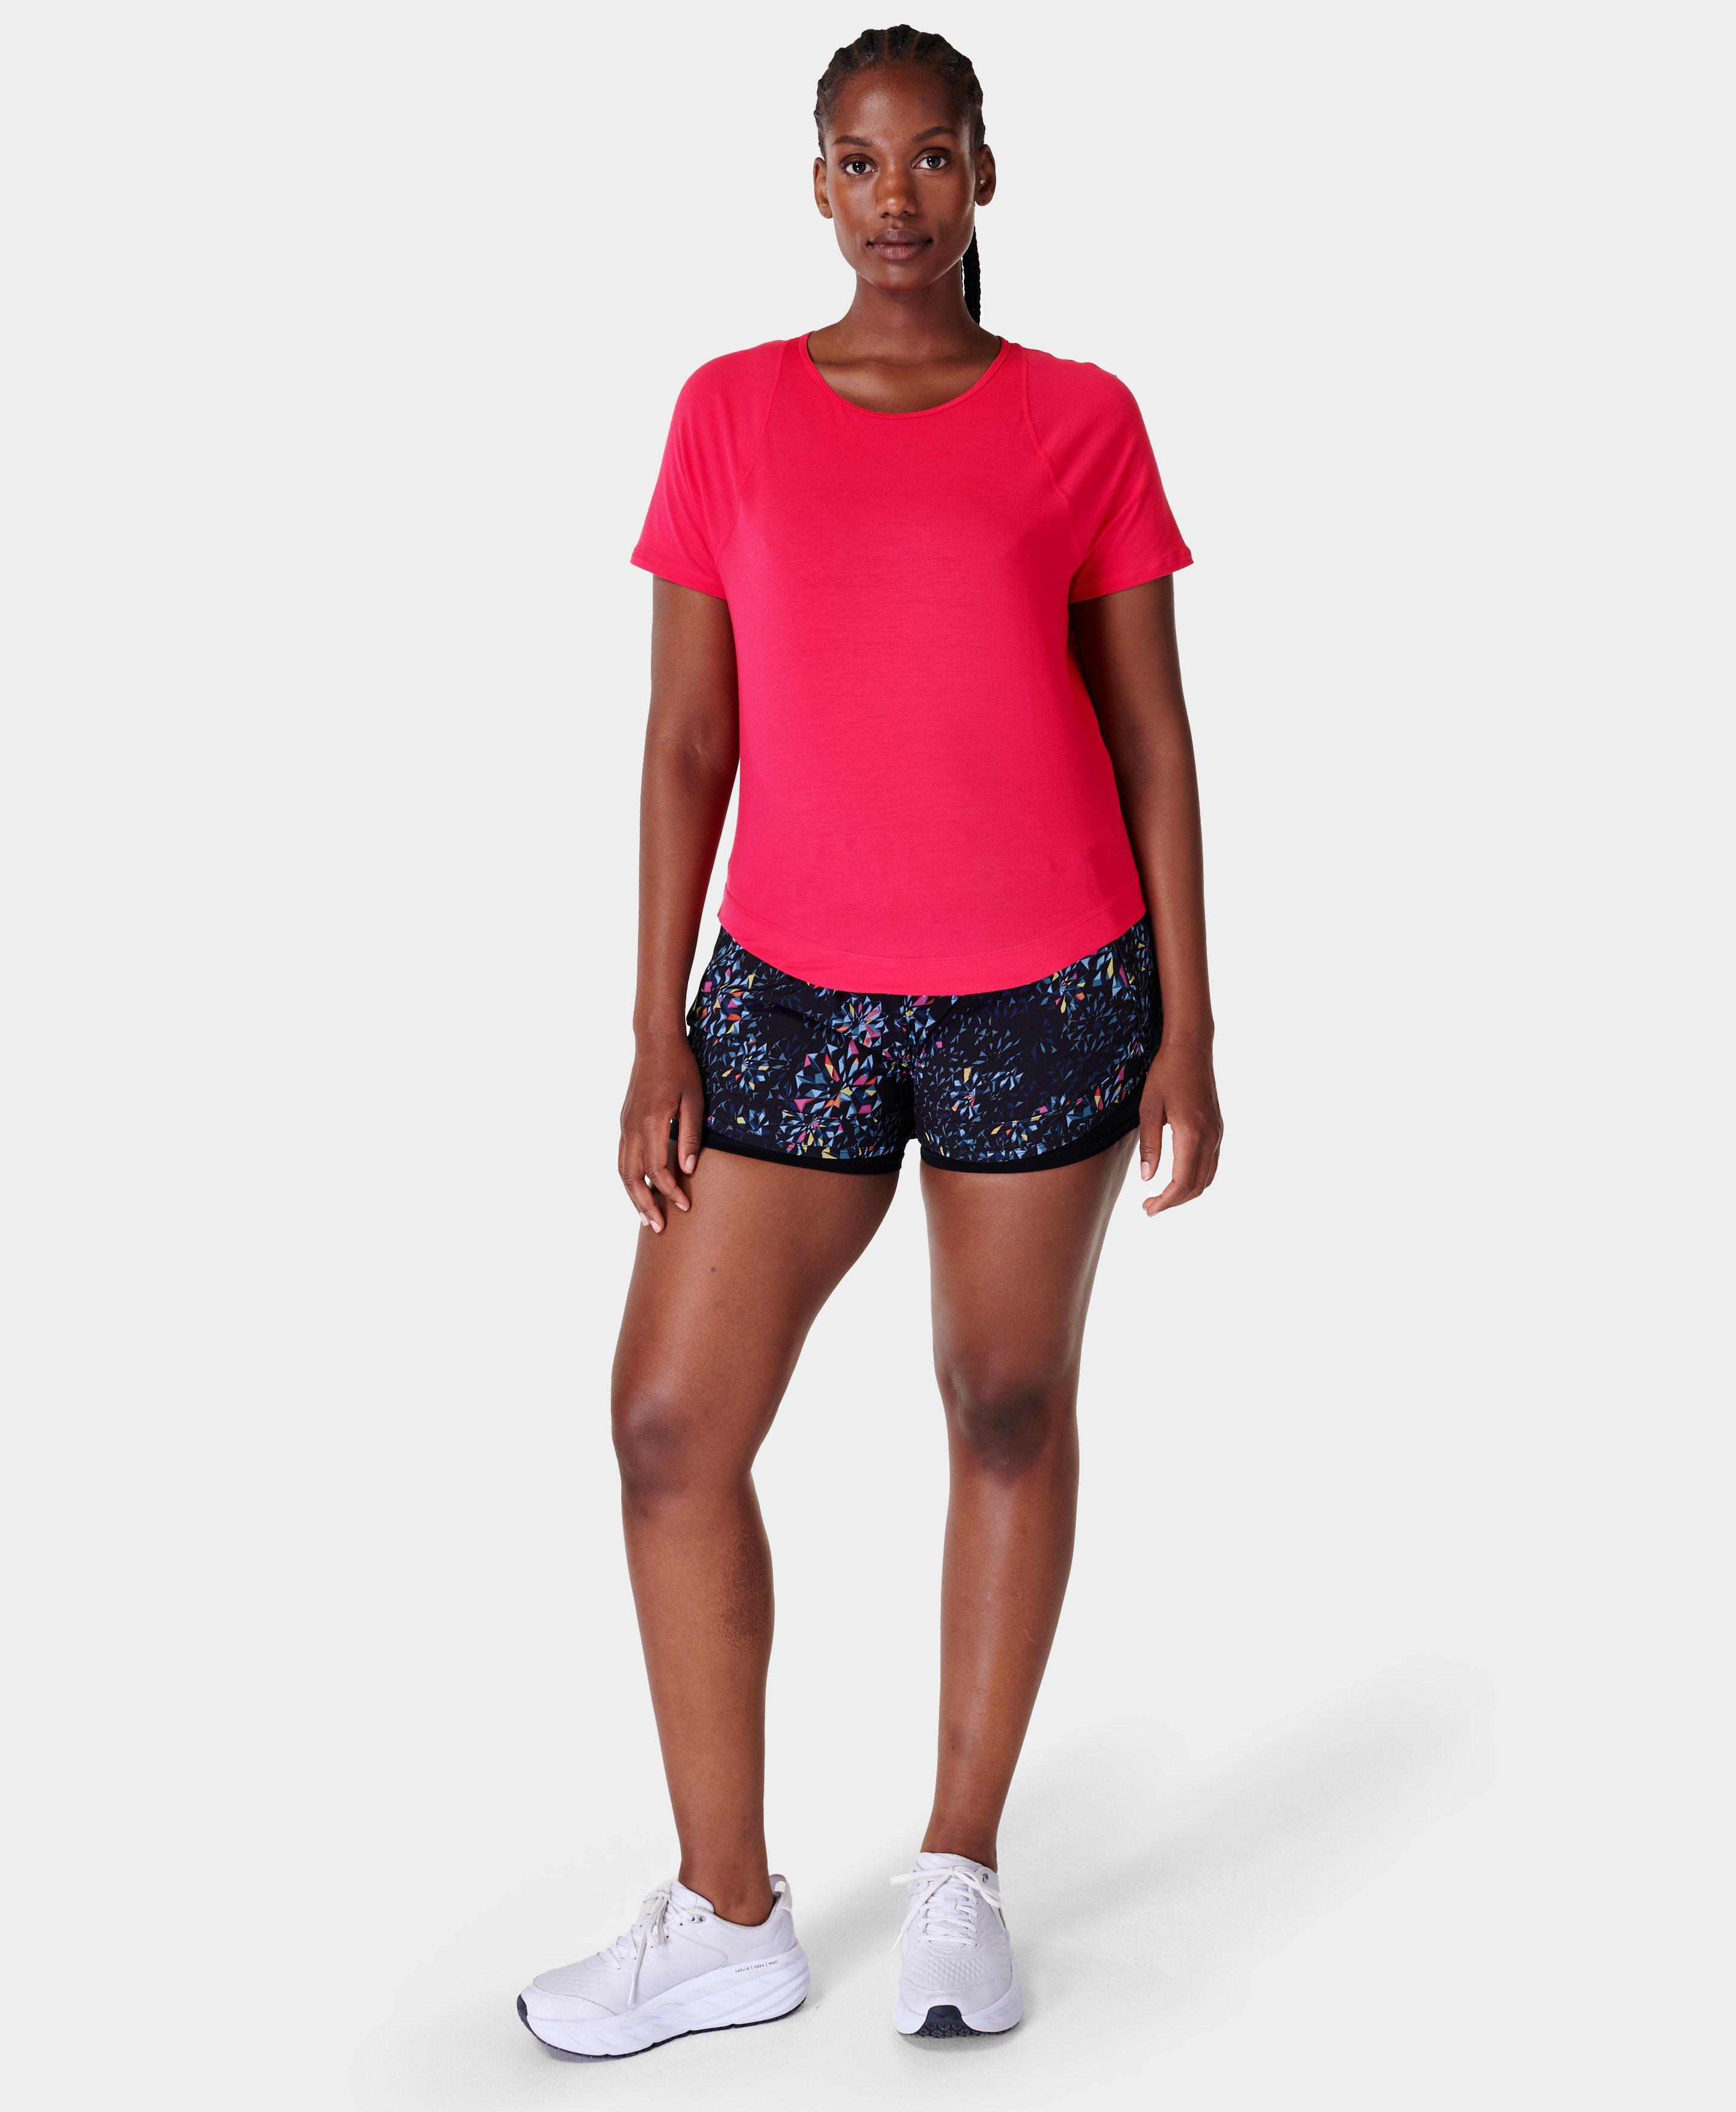 Breathe Easy Running Tee - Venus Pink, Women's T-Shirts